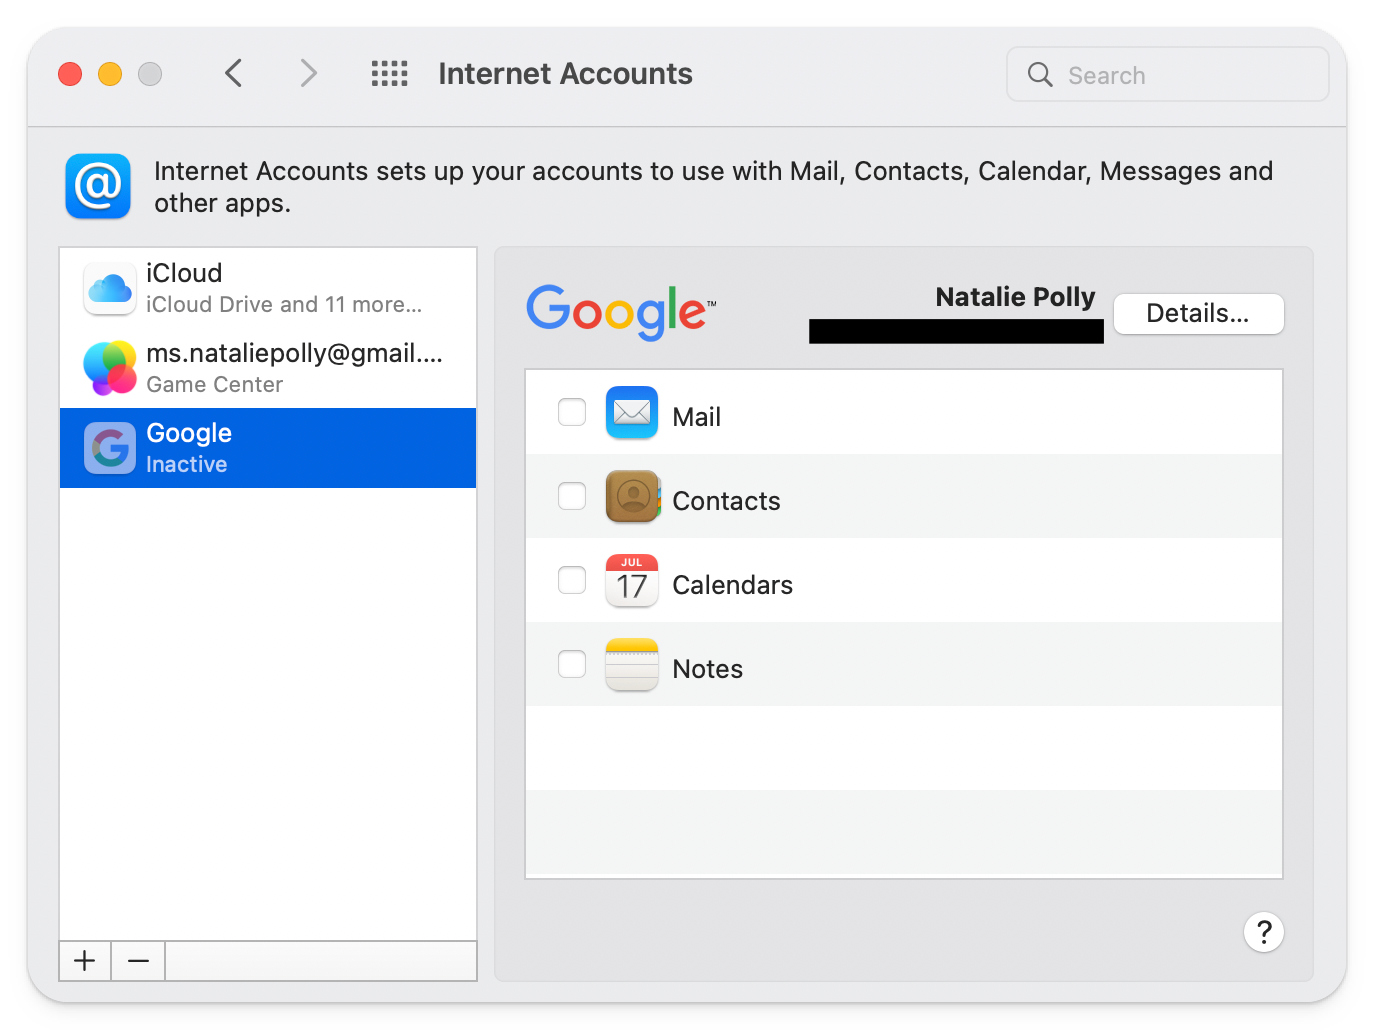 manage Internet Accounts